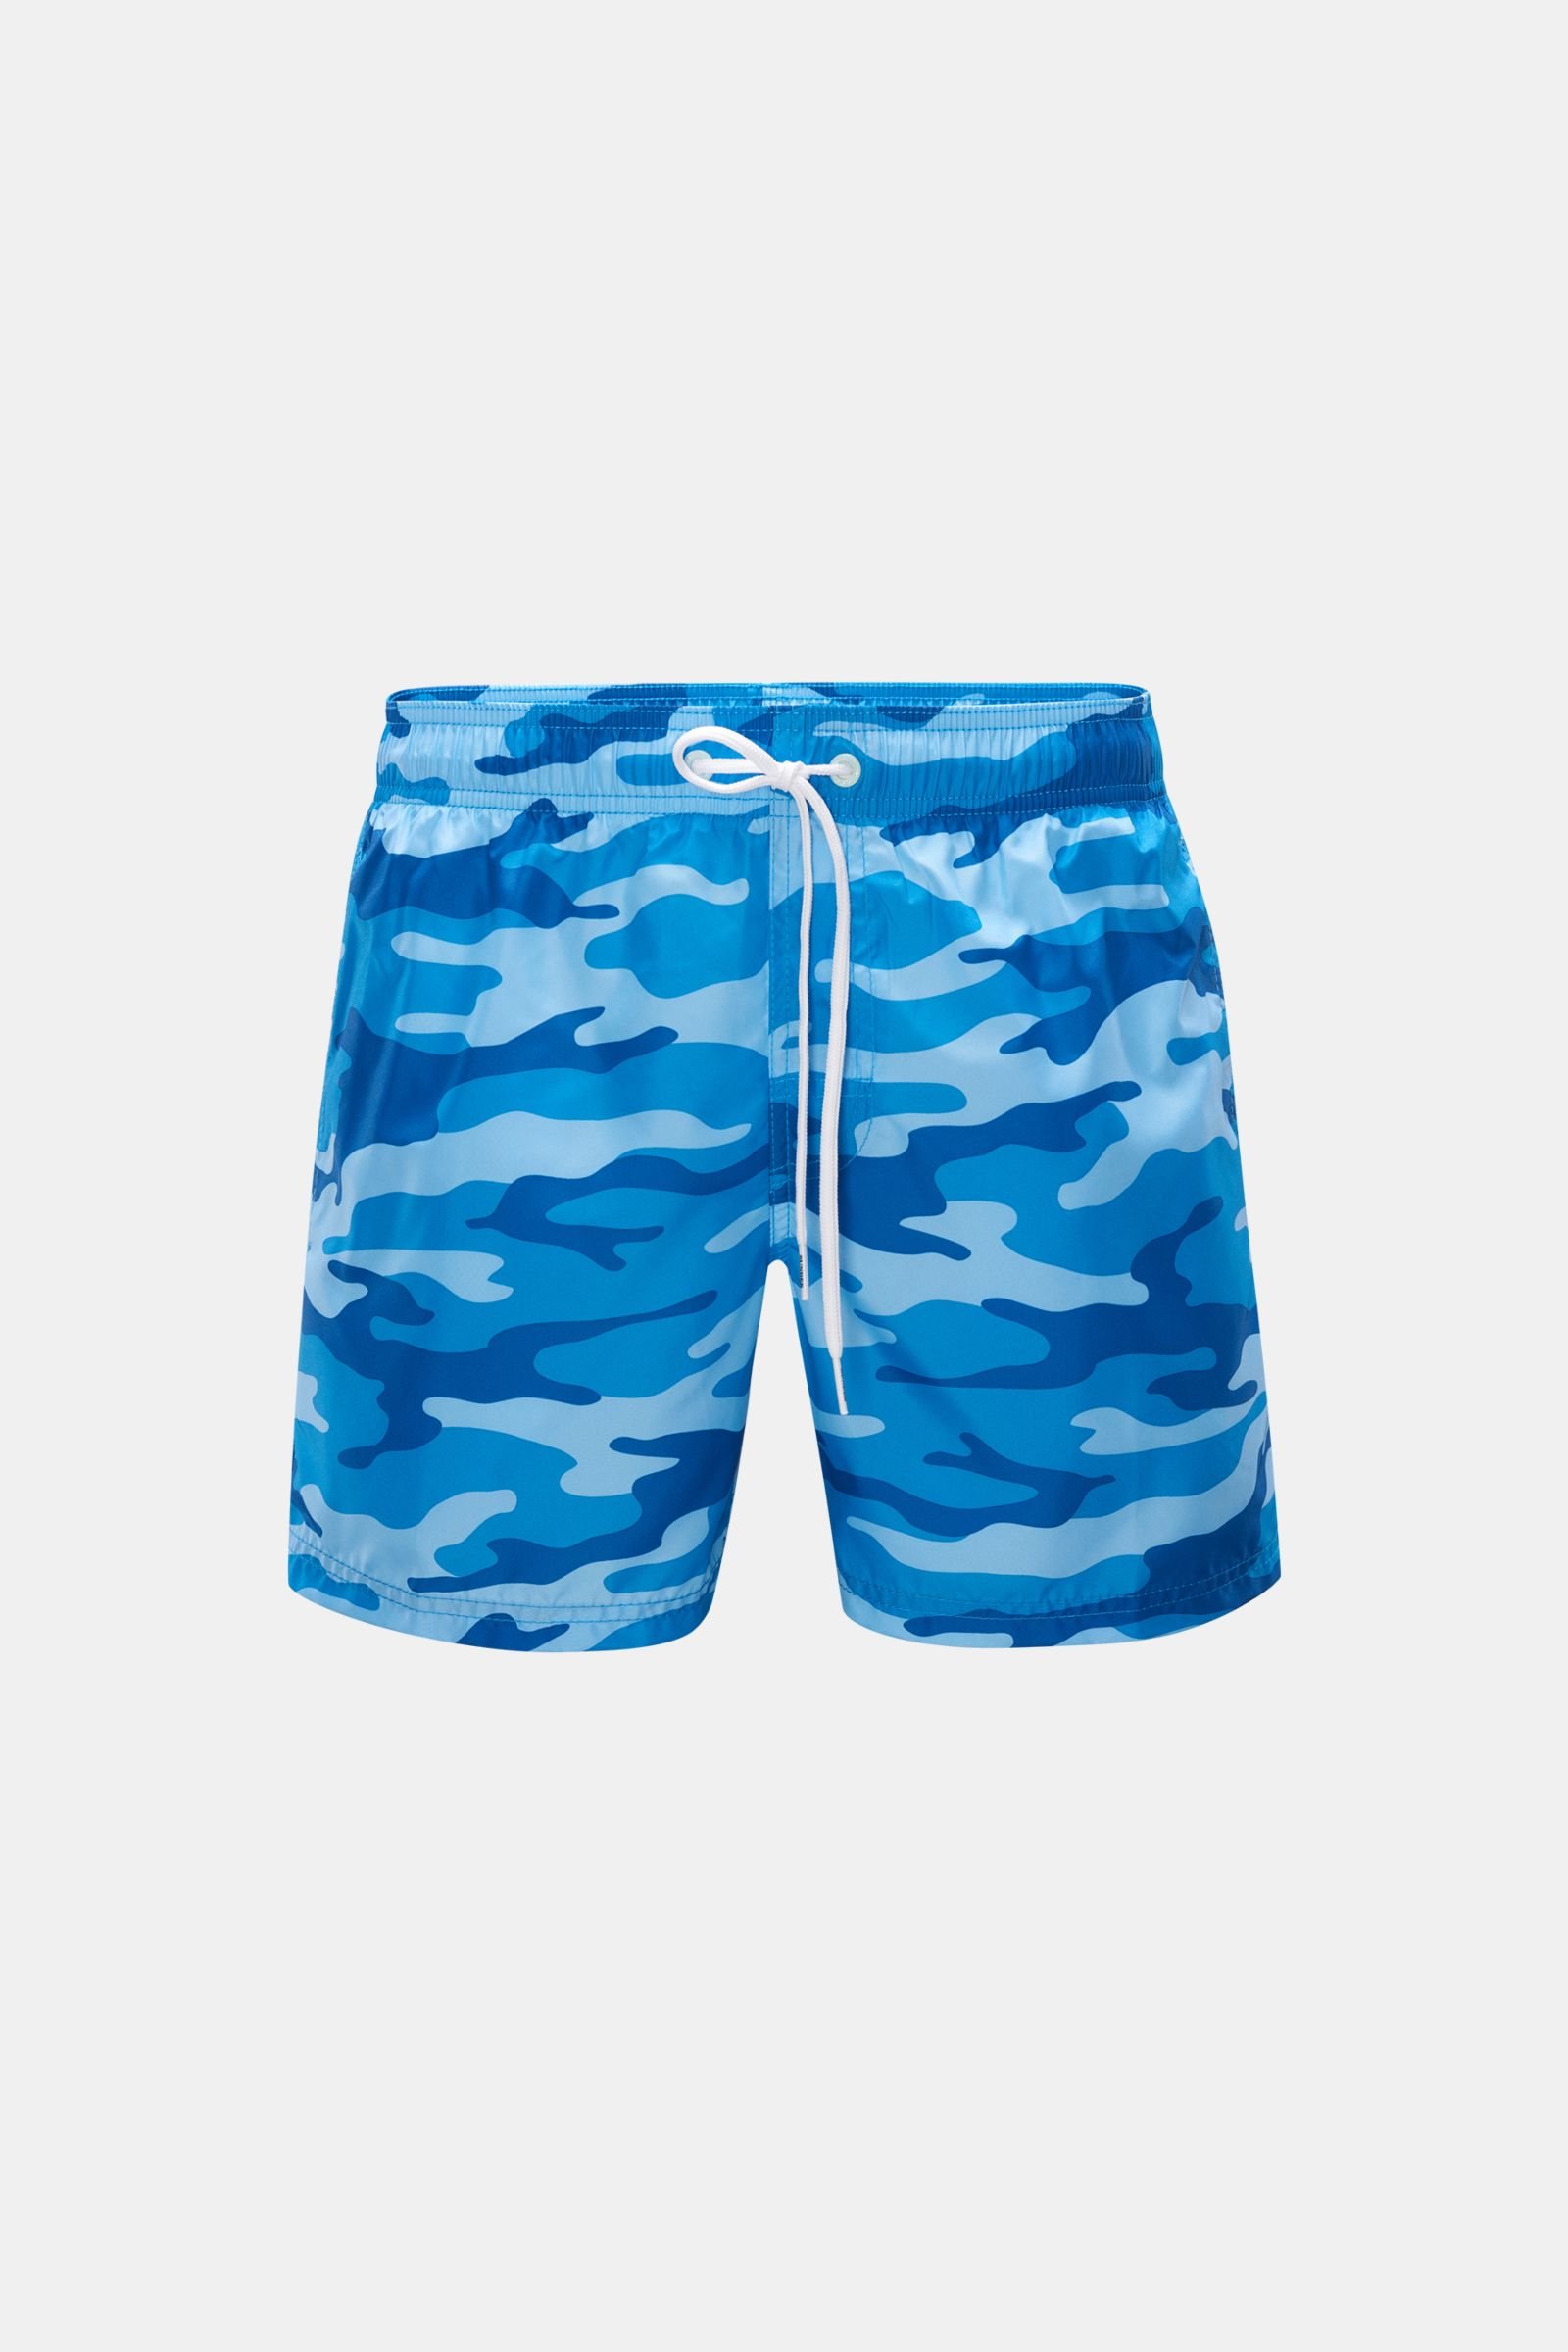 Swim shorts blue/light blue patterned